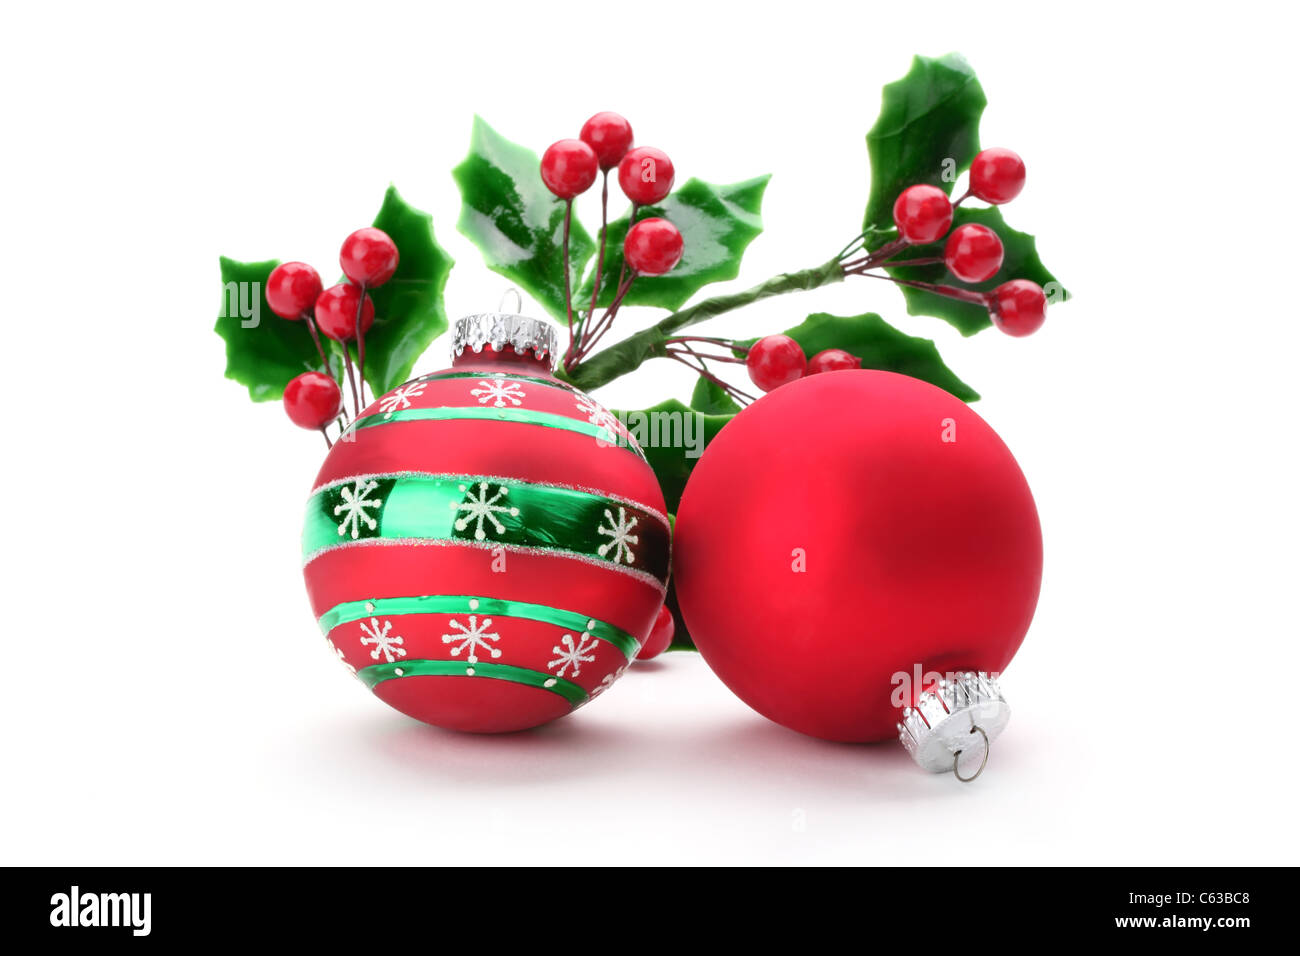 https://c8.alamy.com/comp/C63BC8/christmas-holly-with-decorative-balls-C63BC8.jpg